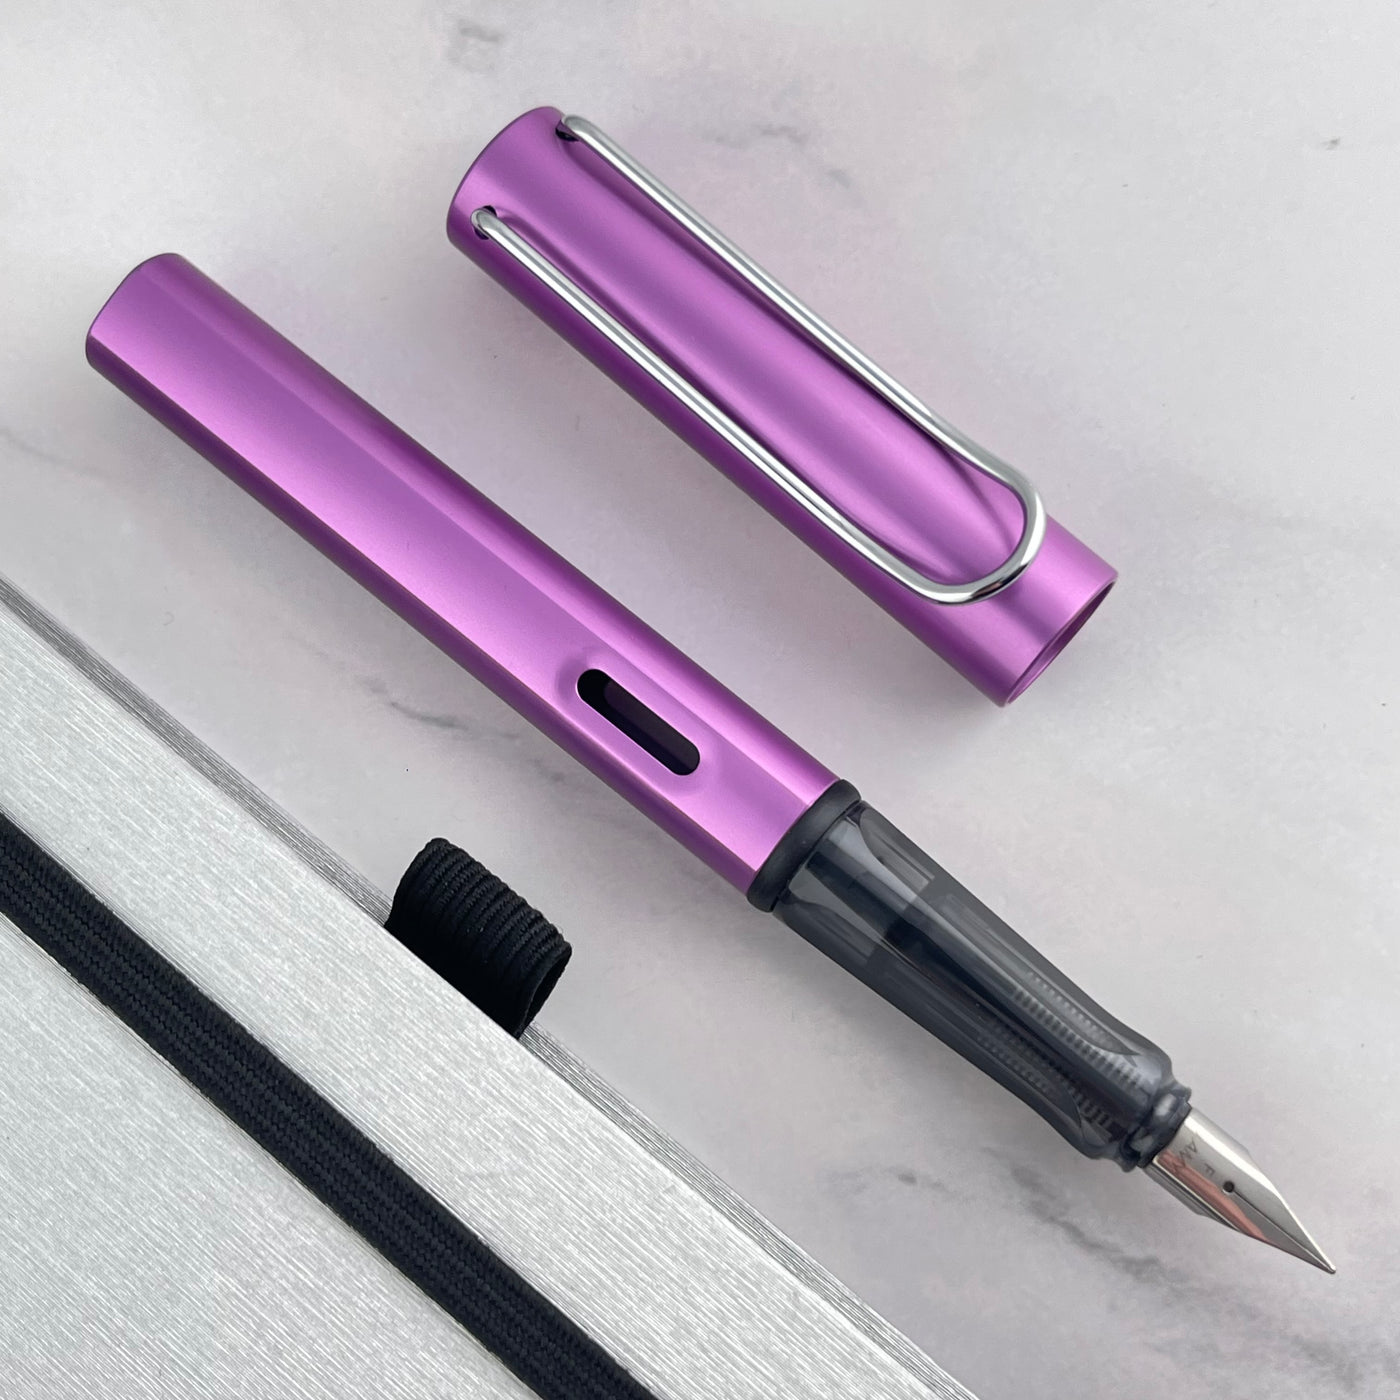 Lamy Al-Star Fountain Pen - Lilac (Special Edition)